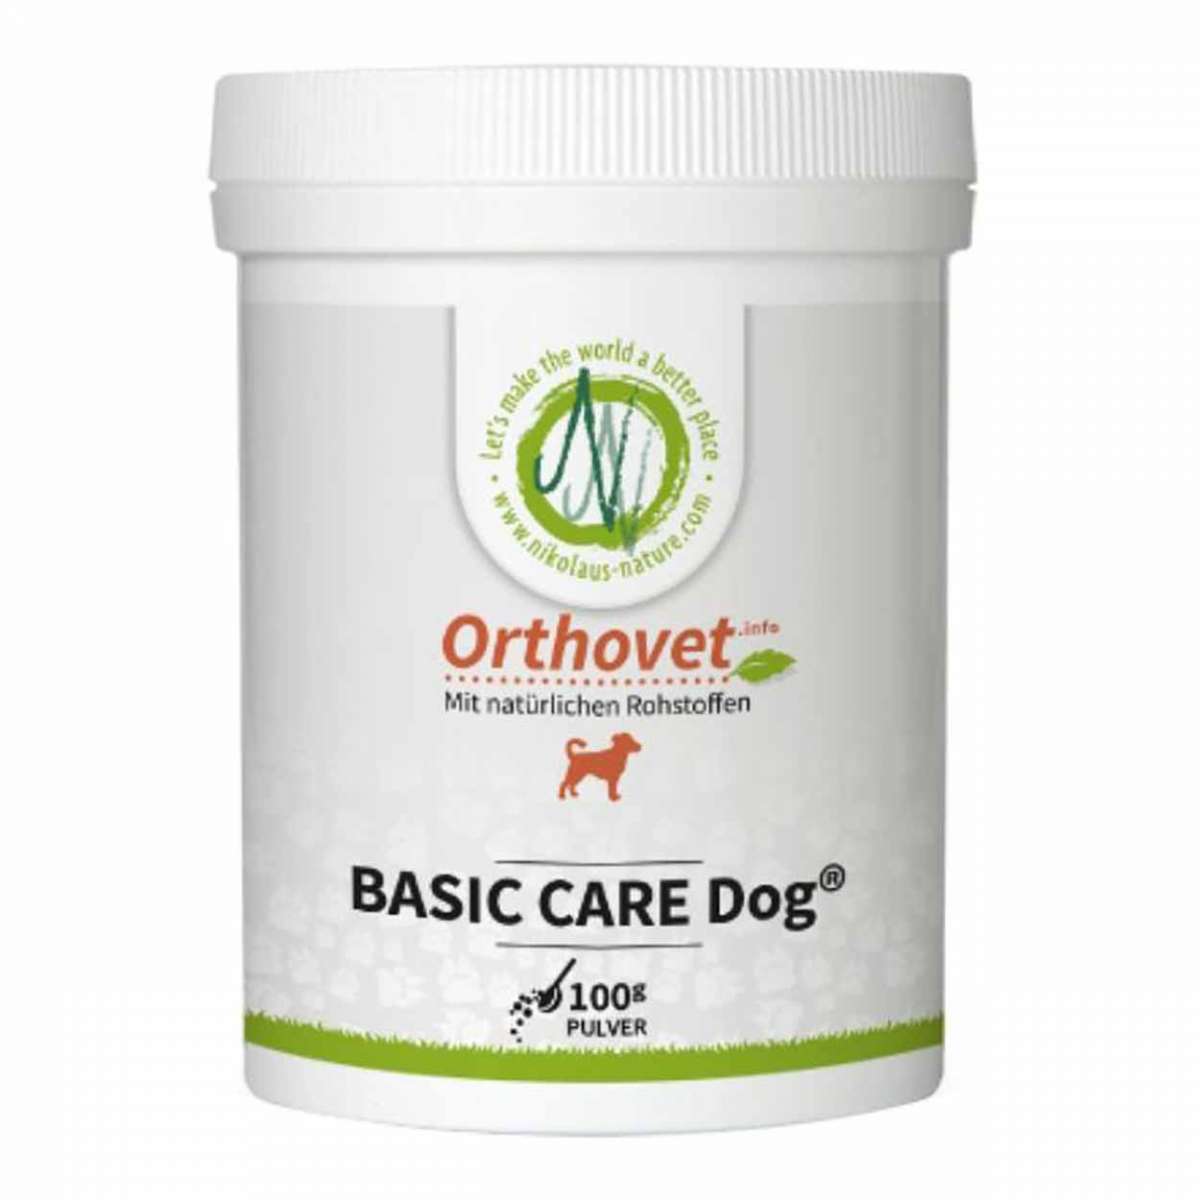 Orthovet Basic Care Dog 100g Mineralzusatz für den Hund Vitamine